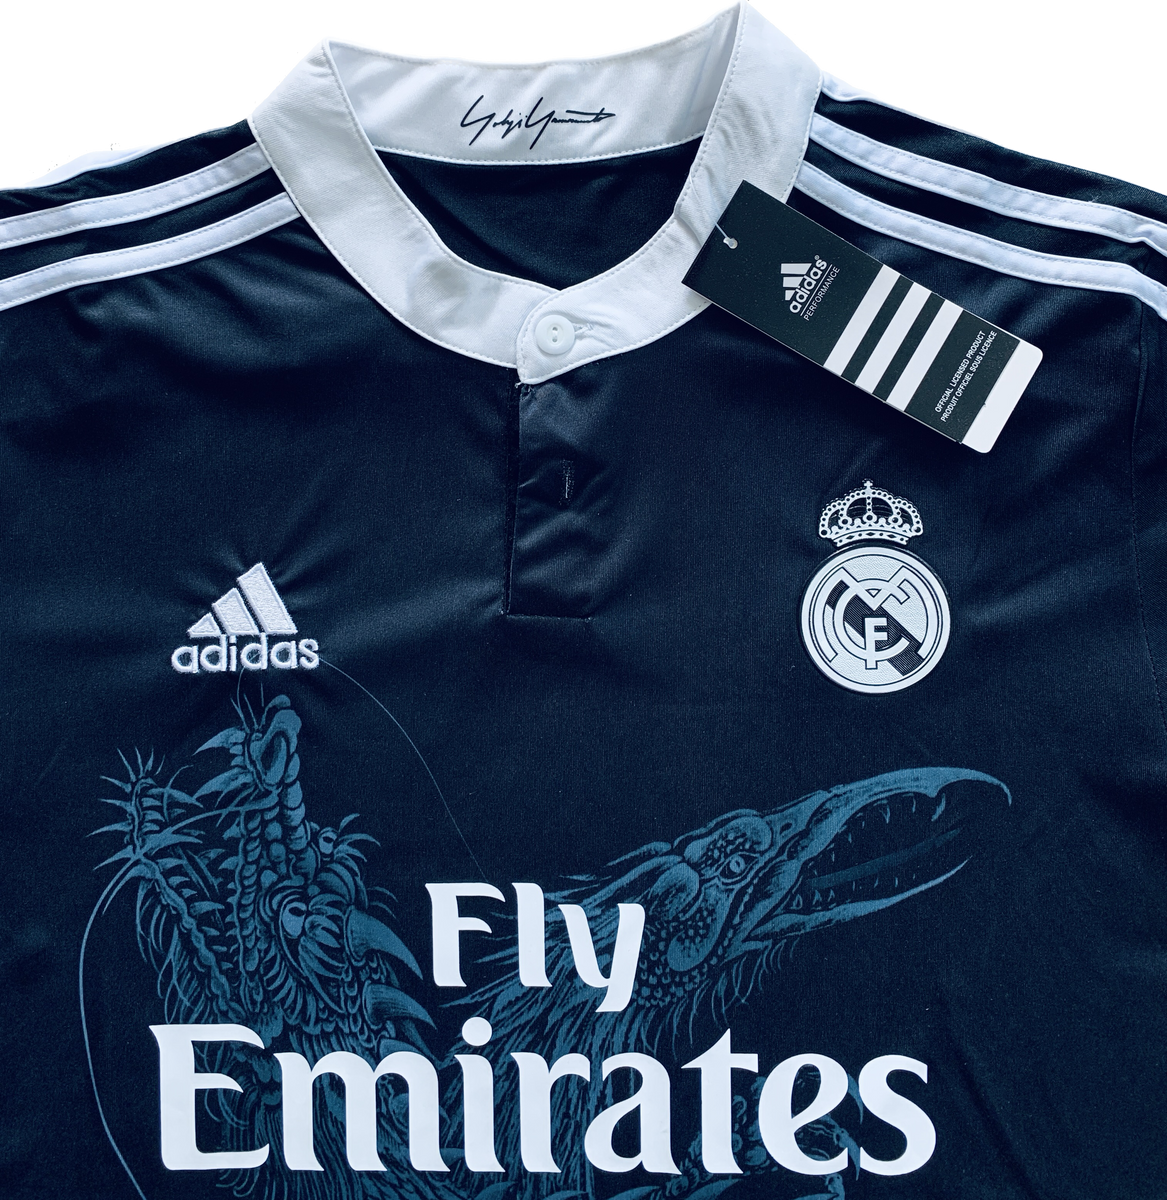 adidas Launches Yamamoto Dragon Real Madrid 2014/15 Third Kit